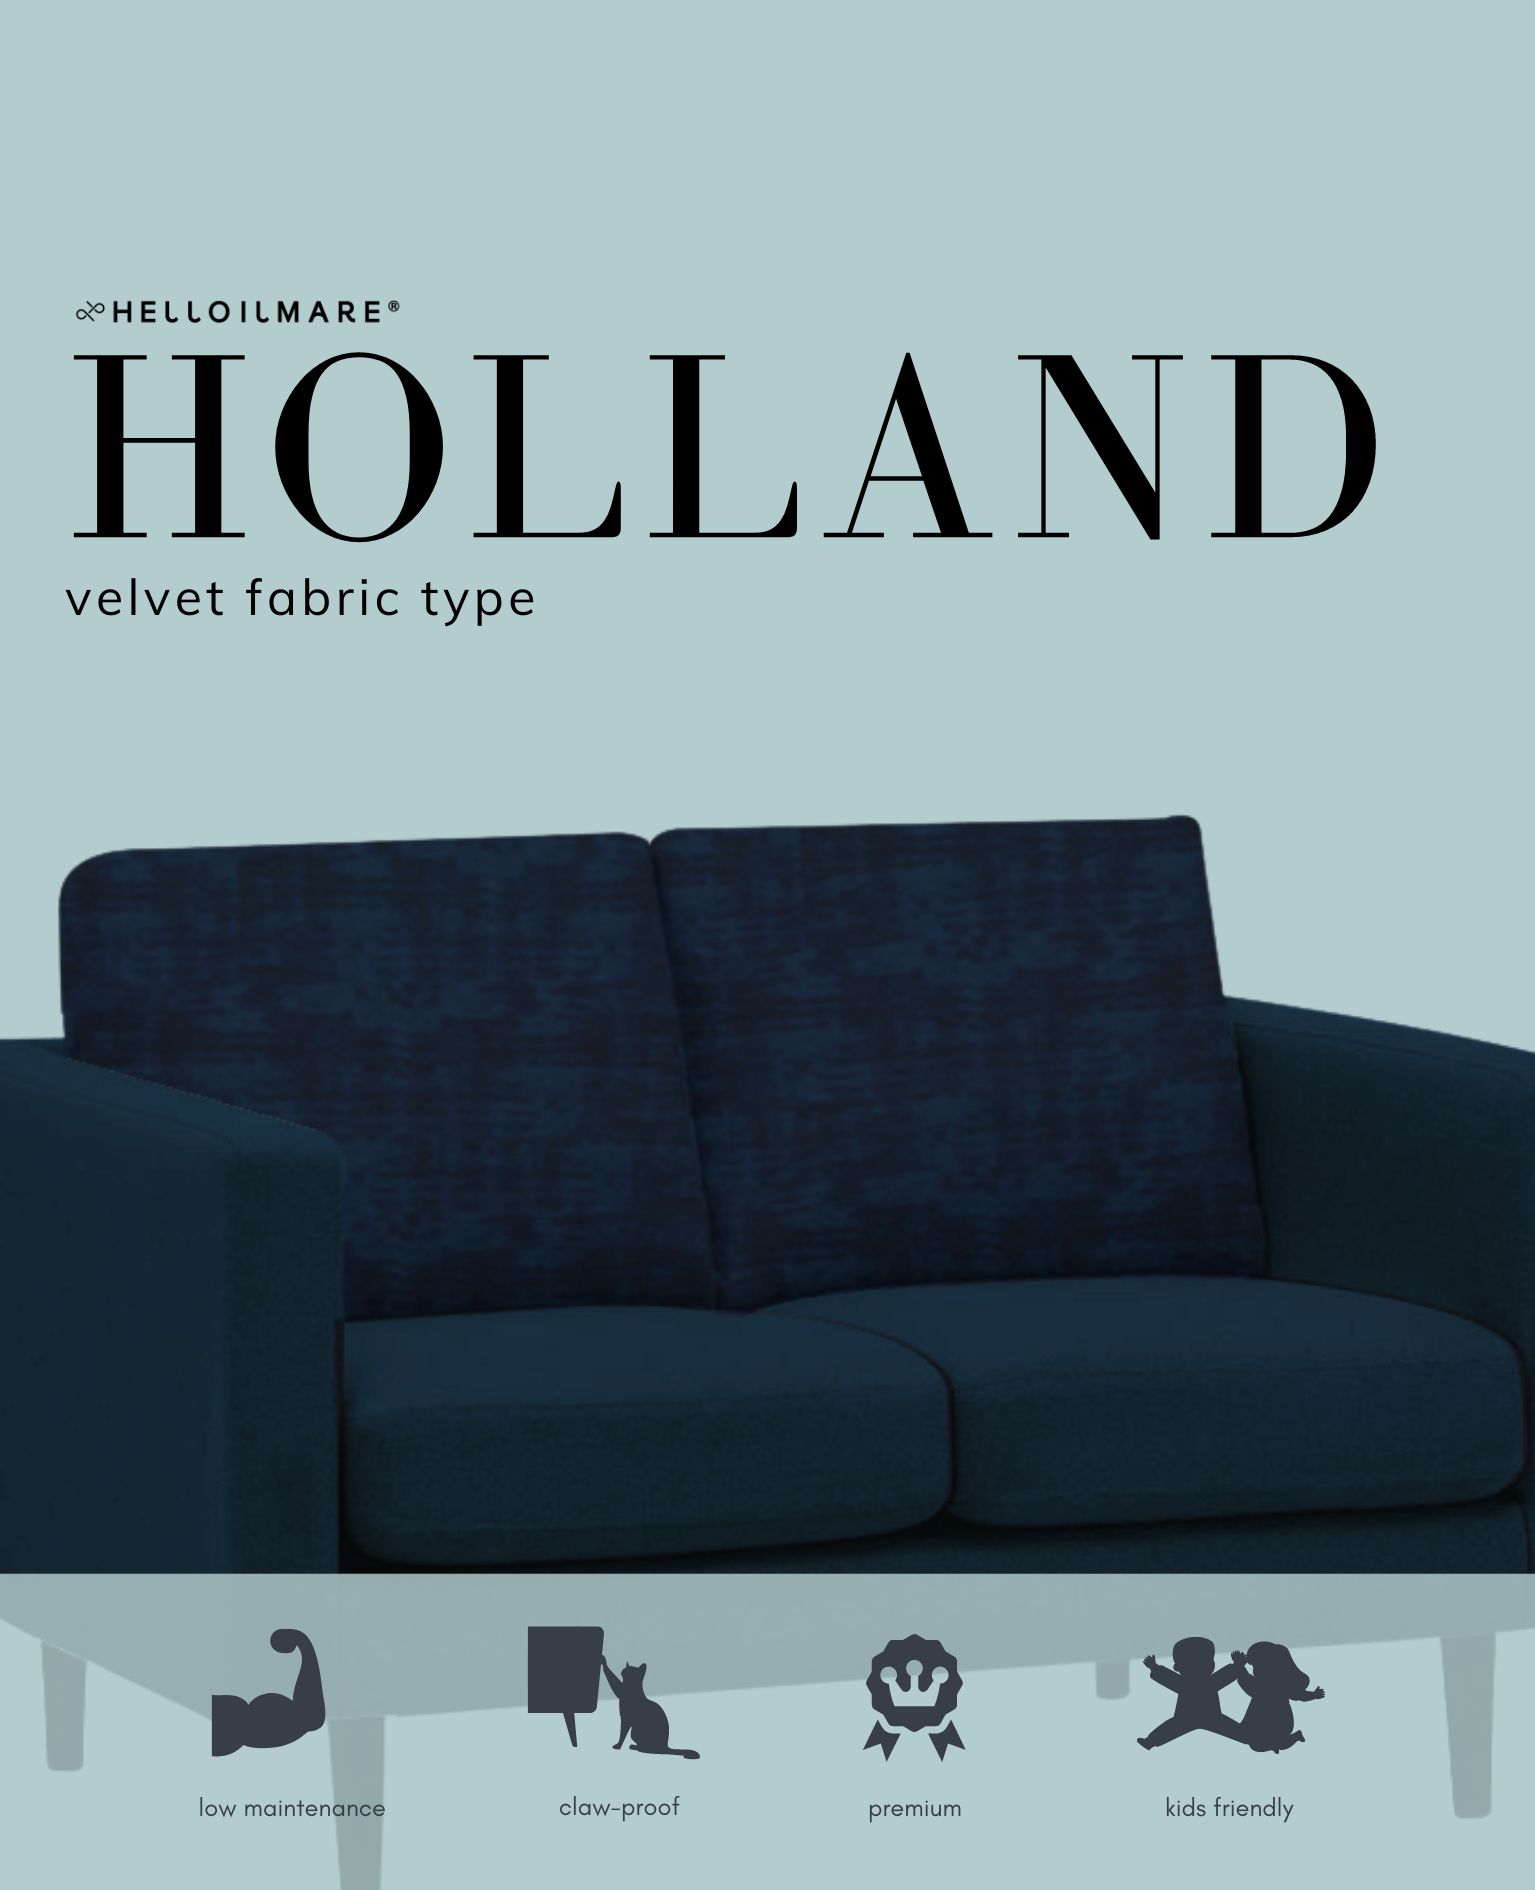 Hand Shaped Sofa - Helloilmare